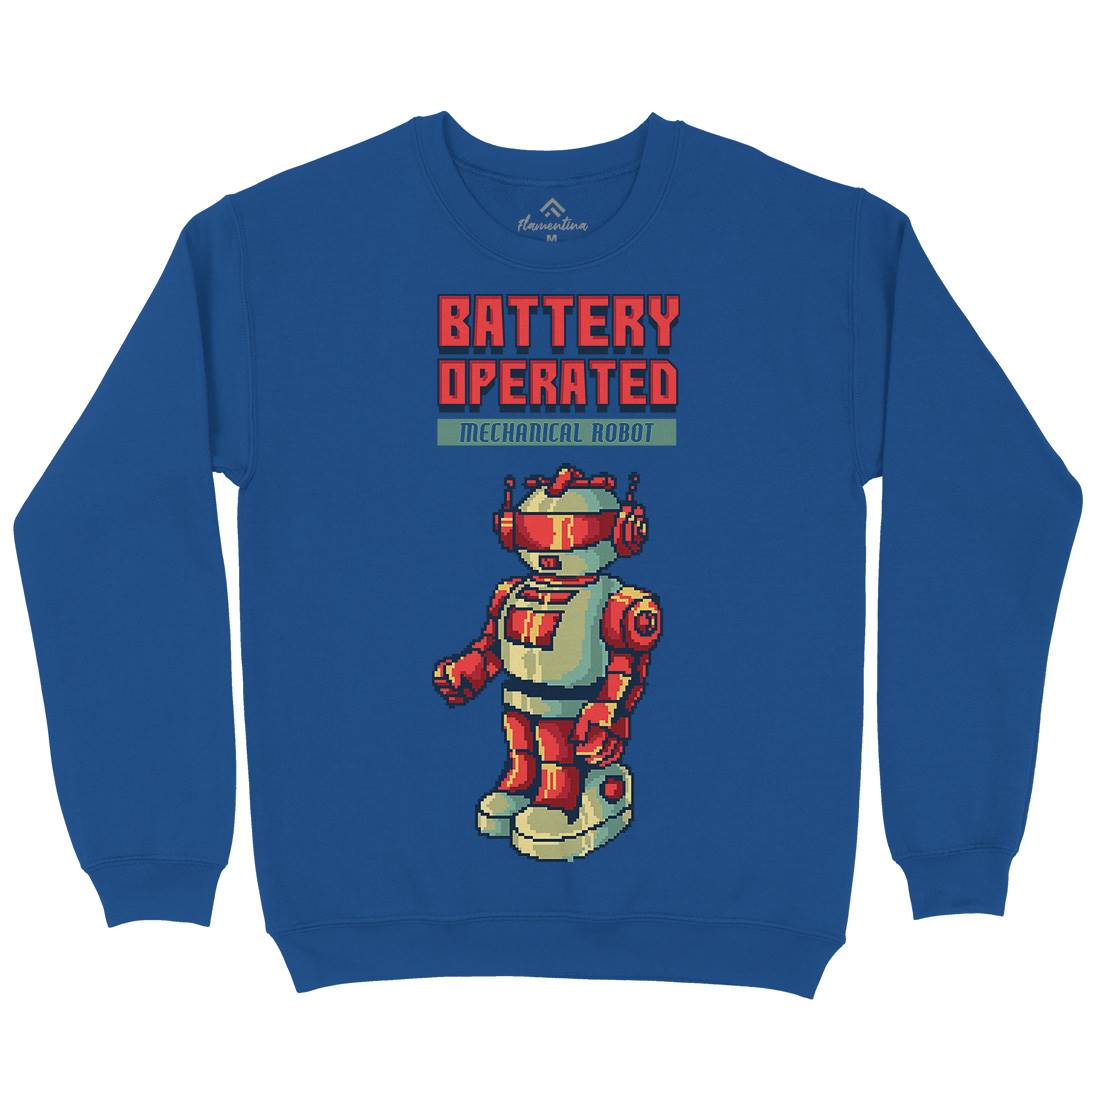 Vintages Robot Mens Crew Neck Sweatshirt Retro B977